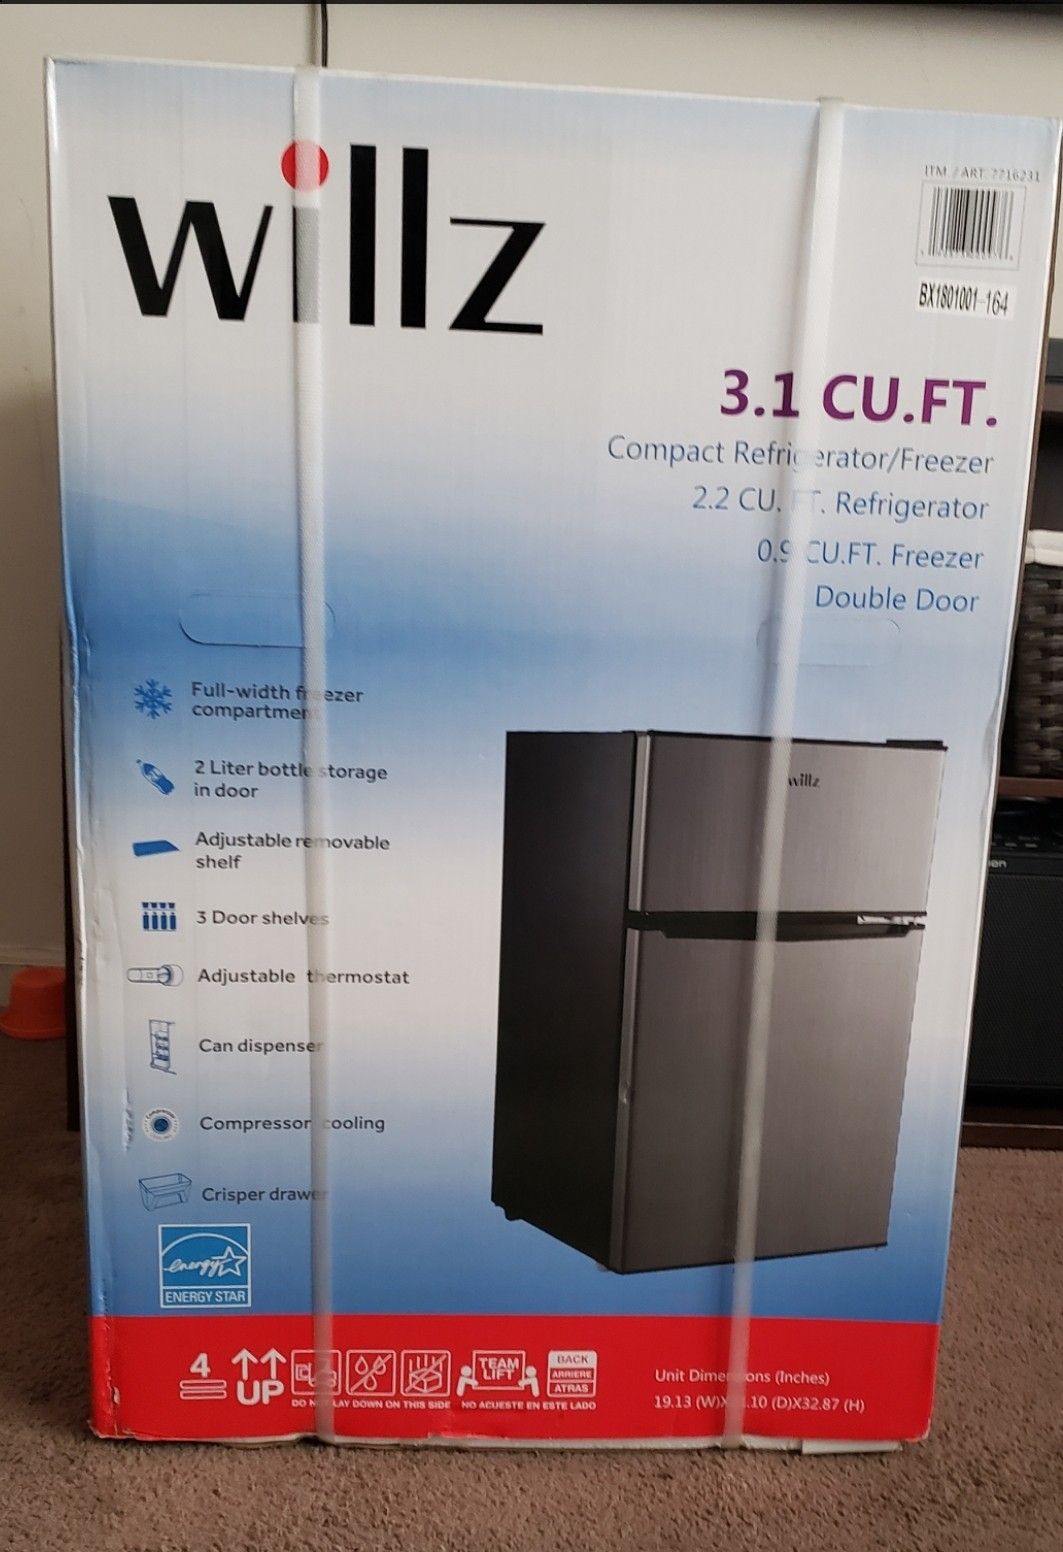 Willz 3.1 CU. FT. compact refrigerator/freezer